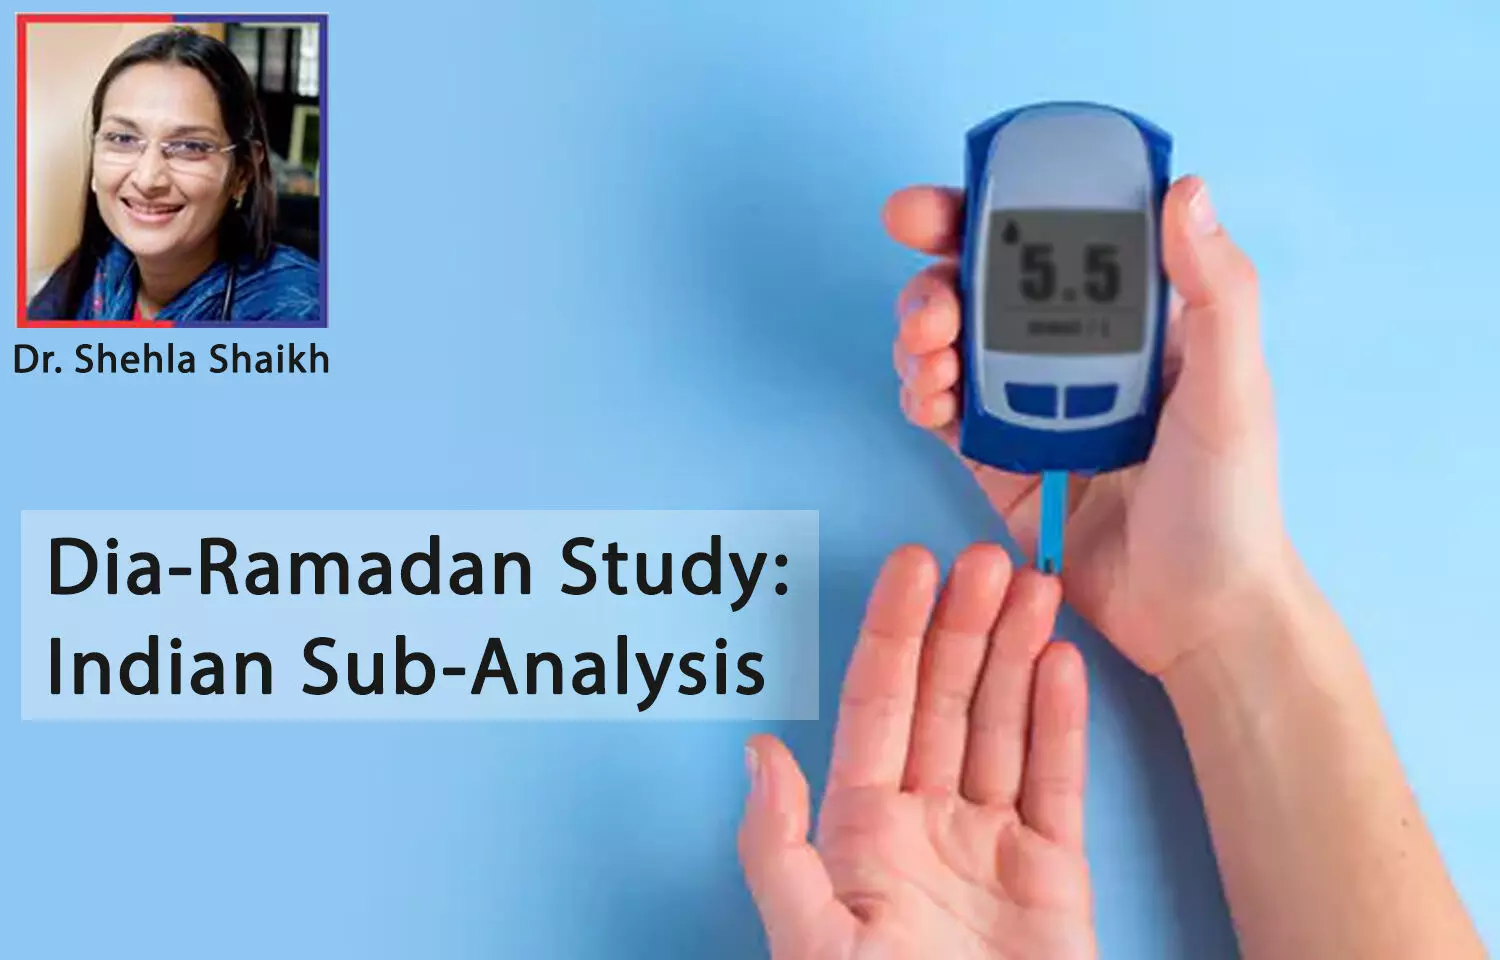 Indian Sub-analysis of DIA-RAMADAN Study: Gliclazide XR 60 mg found safe, effective in blood sugar management during Ramadan